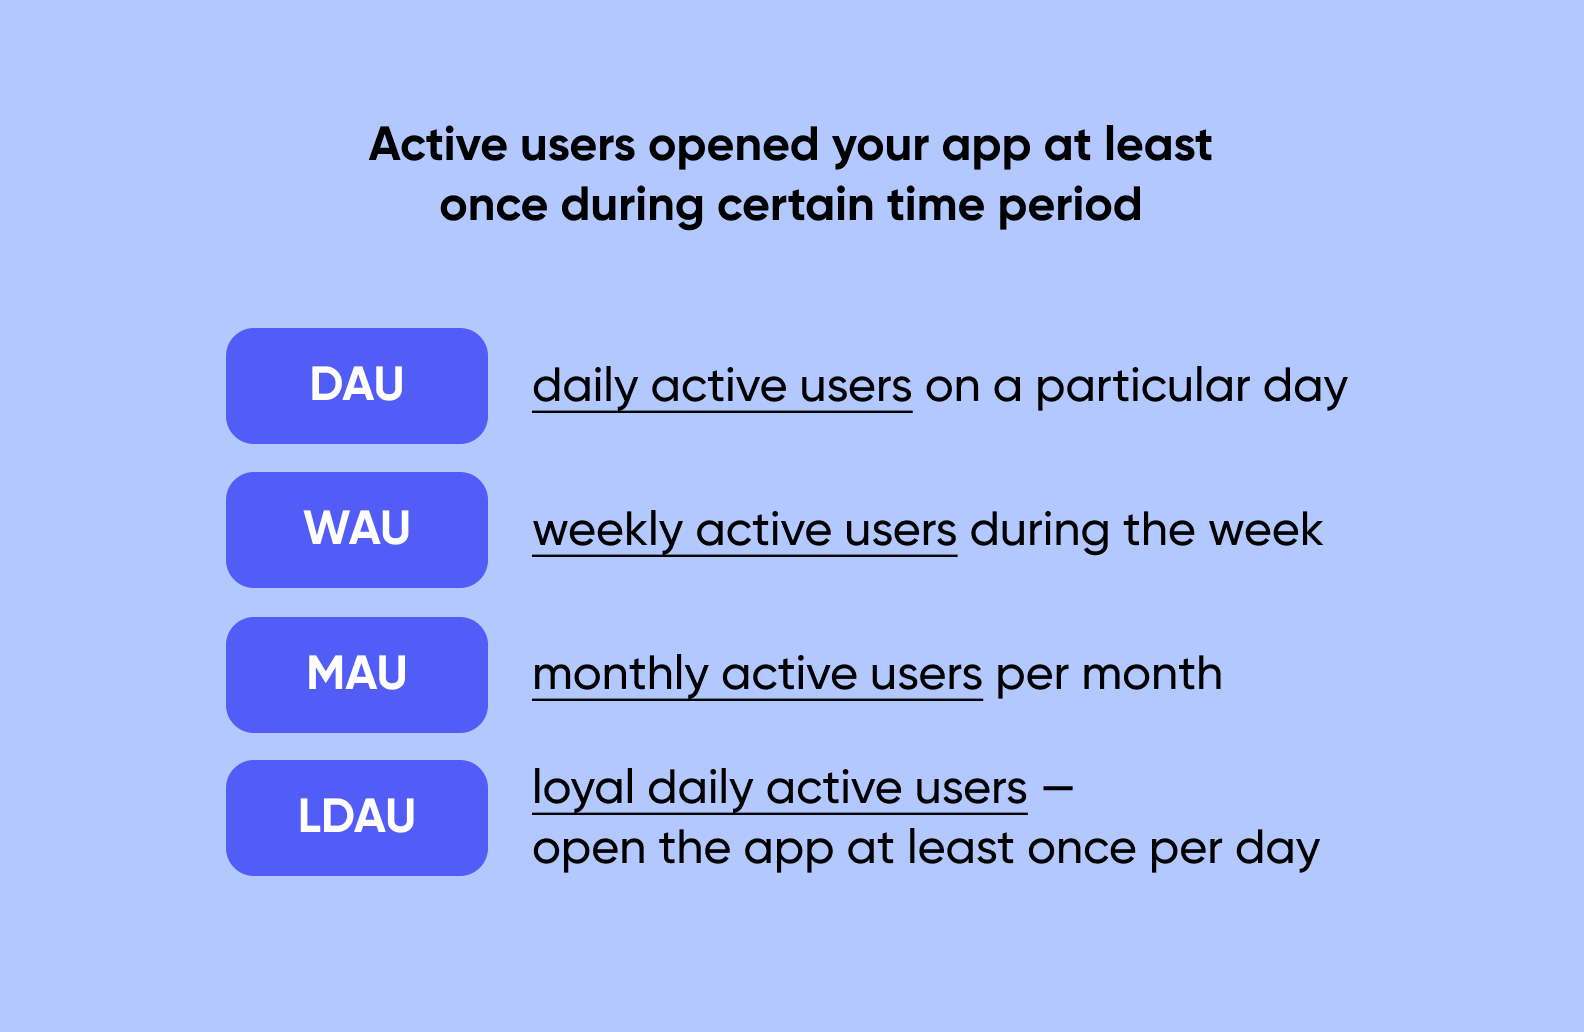 User activity metrics.DAU, WAU, MAU, and LDAU.